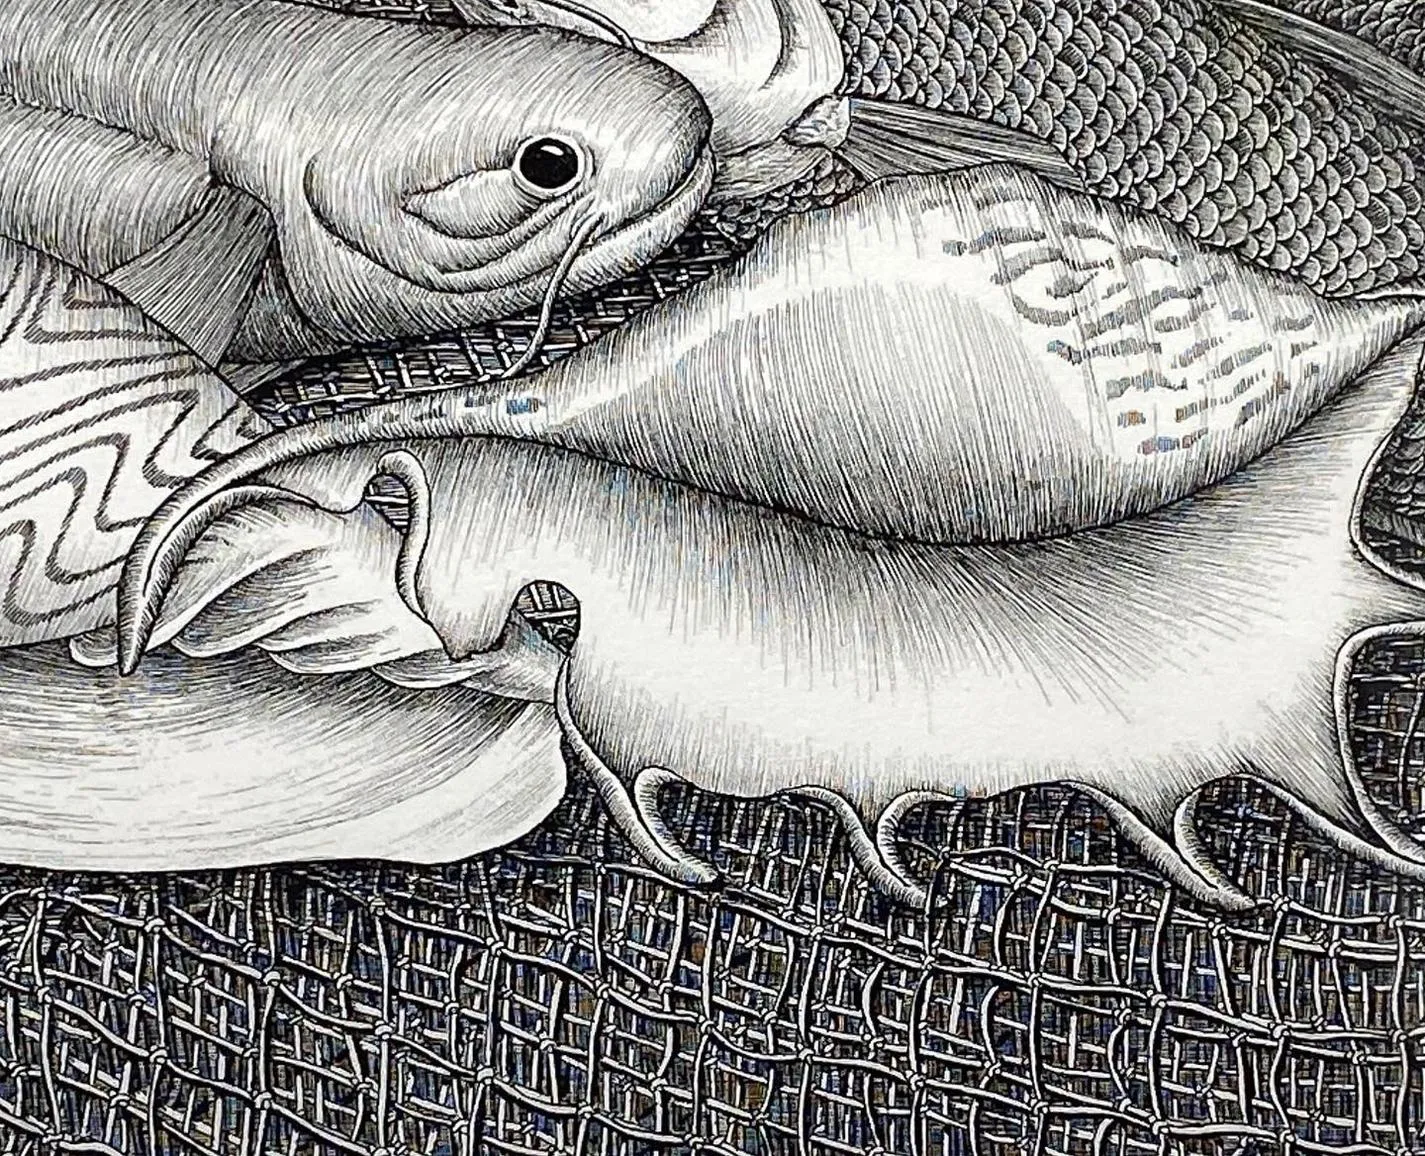 14514.Decor Poster print.Room wall art.Marine life drawing.Fish market  design | eBay